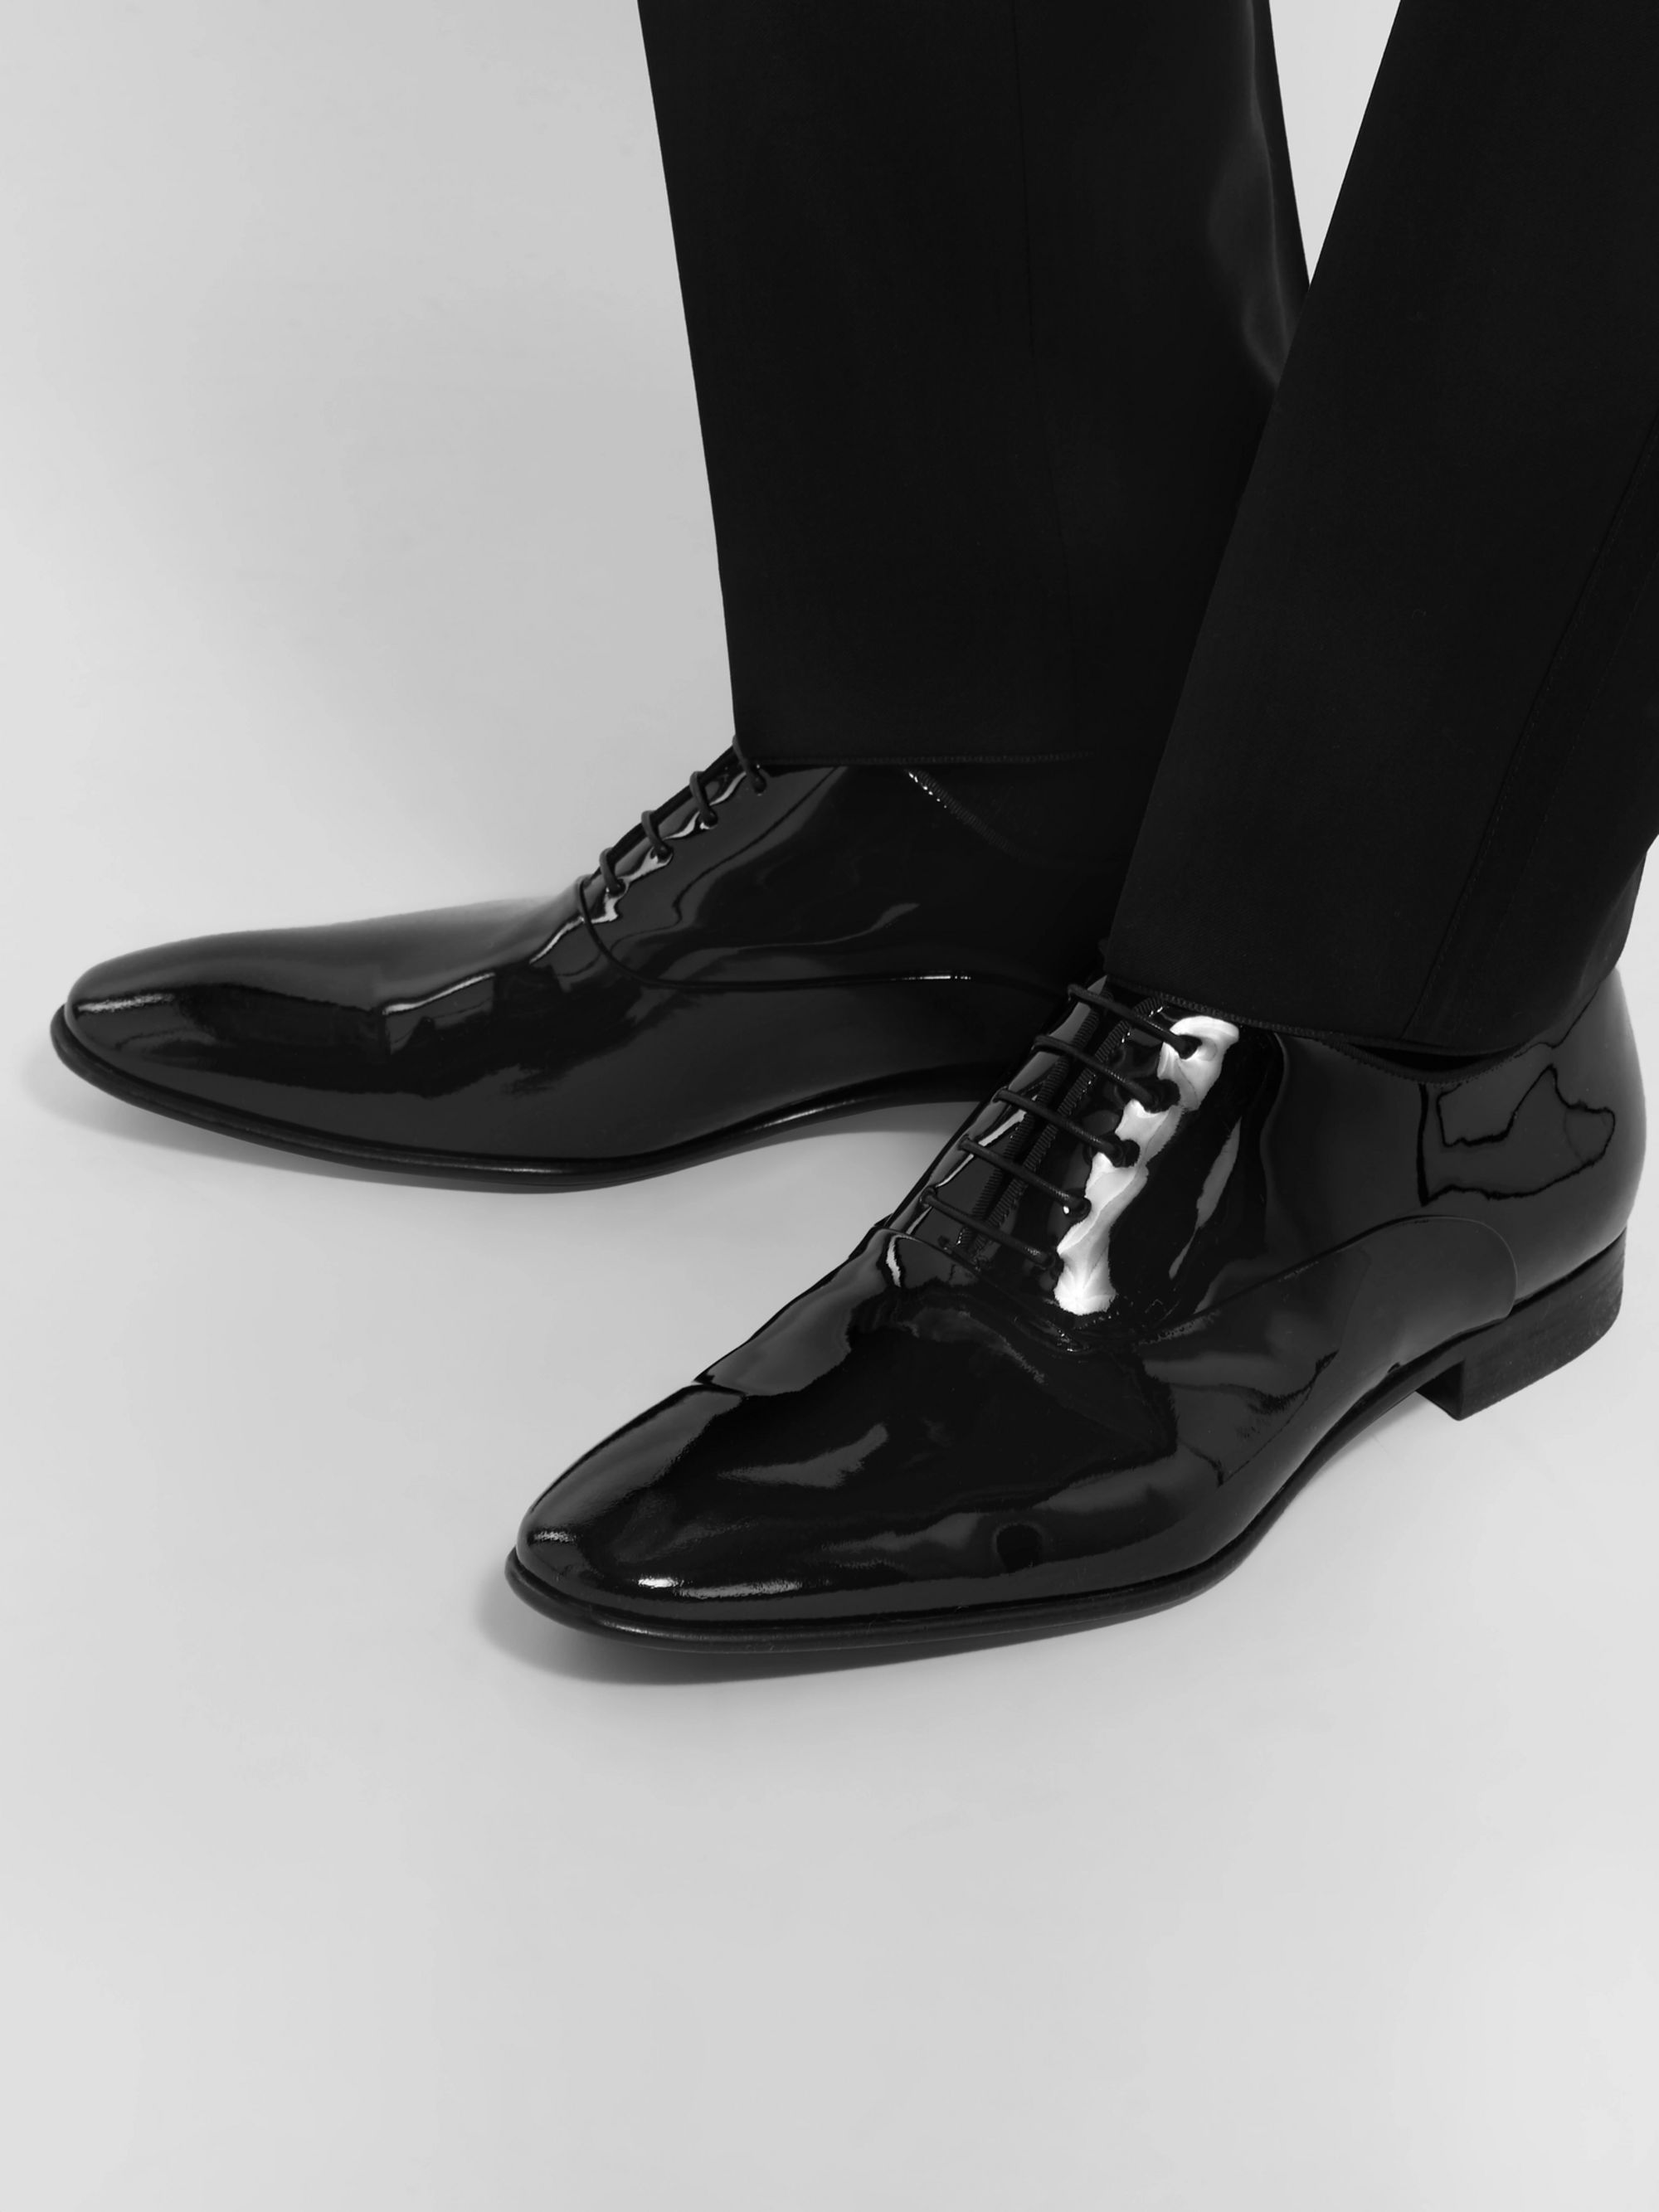 hugo boss patent shoes